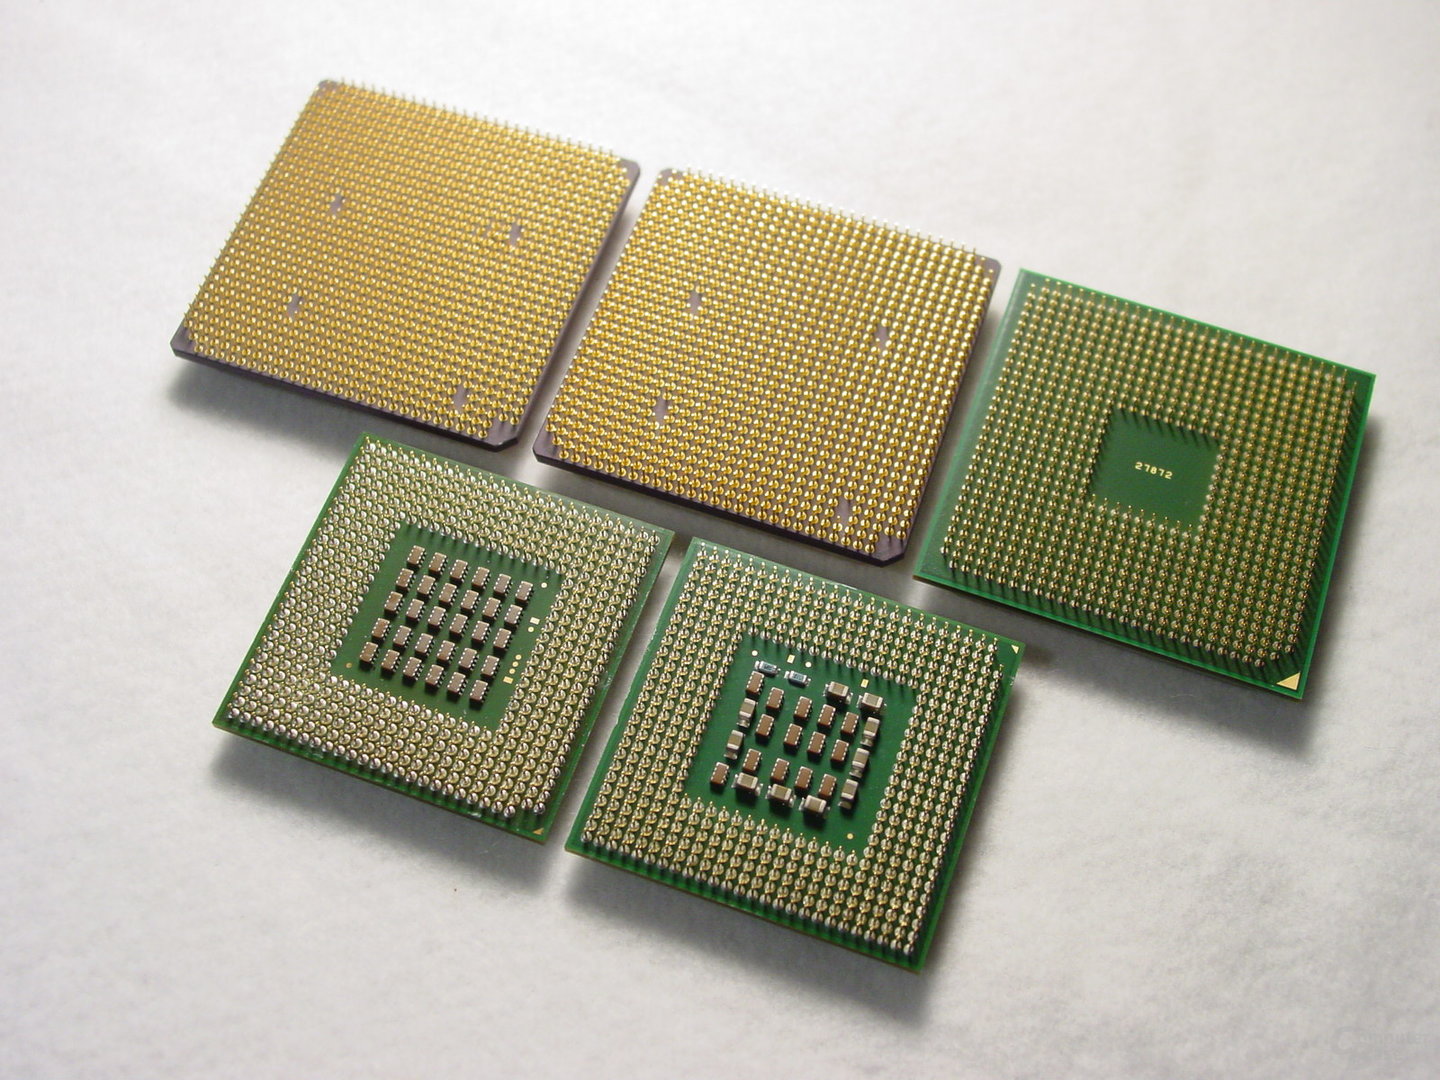 v.l.n.r.: Athlon 64 FX-53, Athlon 64 FX-51, Athlon 64 3400+, Pentium 4 Extreme Edition 3,4 GHz, Pentium 4 3,2E GHz